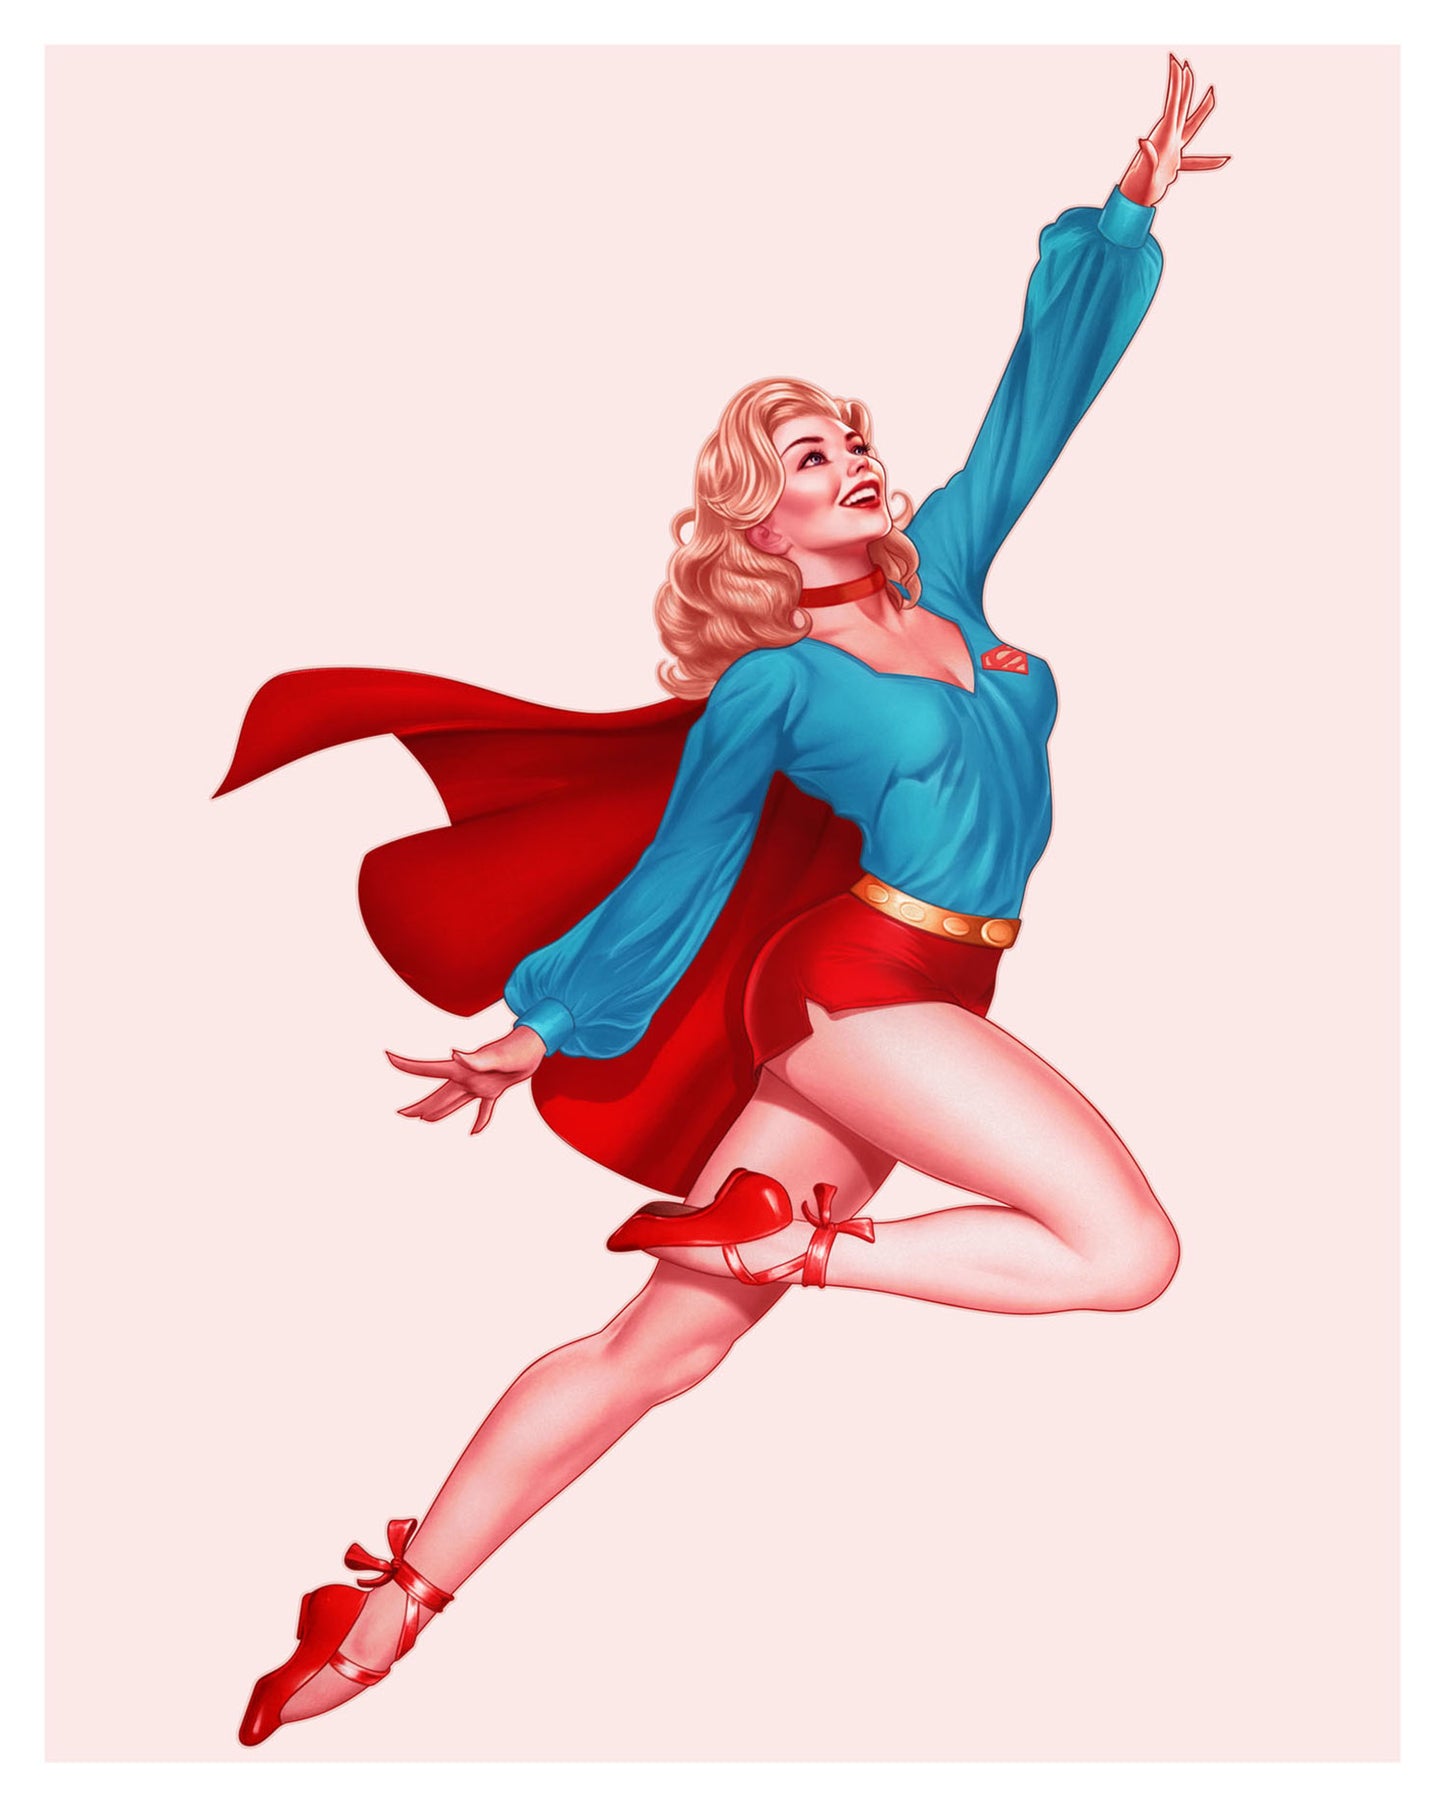 John Keaveney "Supergirl" Adventure Comics